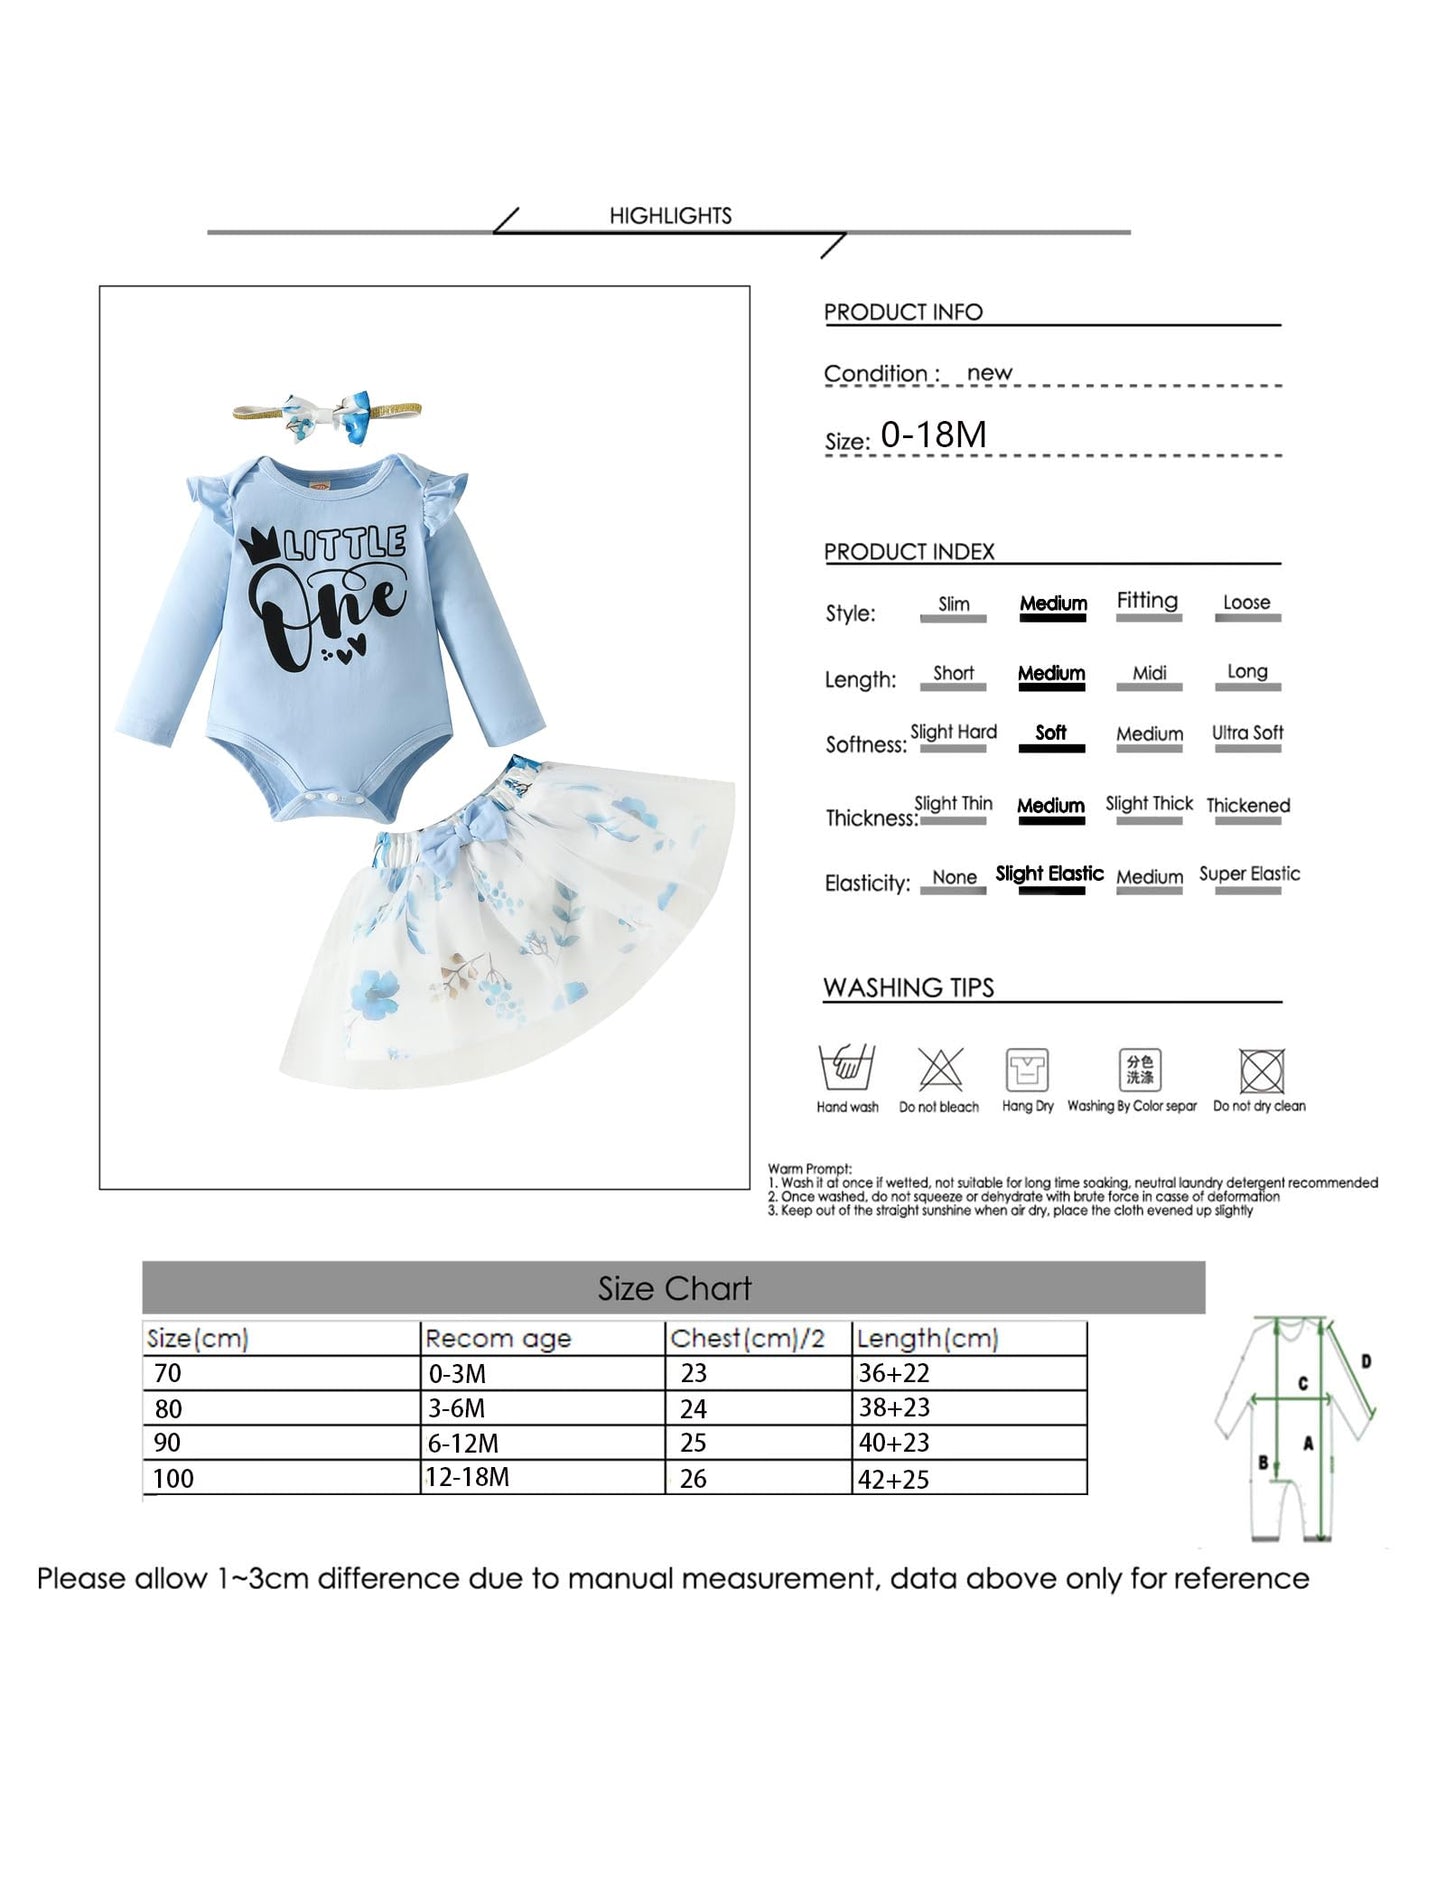 Haokaini Baby Girl Skirt Set New Born Long Ruffles Sleeve Lettering Print Novel Top Flower Tutu Bow Princess Dress Three Pieces, for 0-3 Months